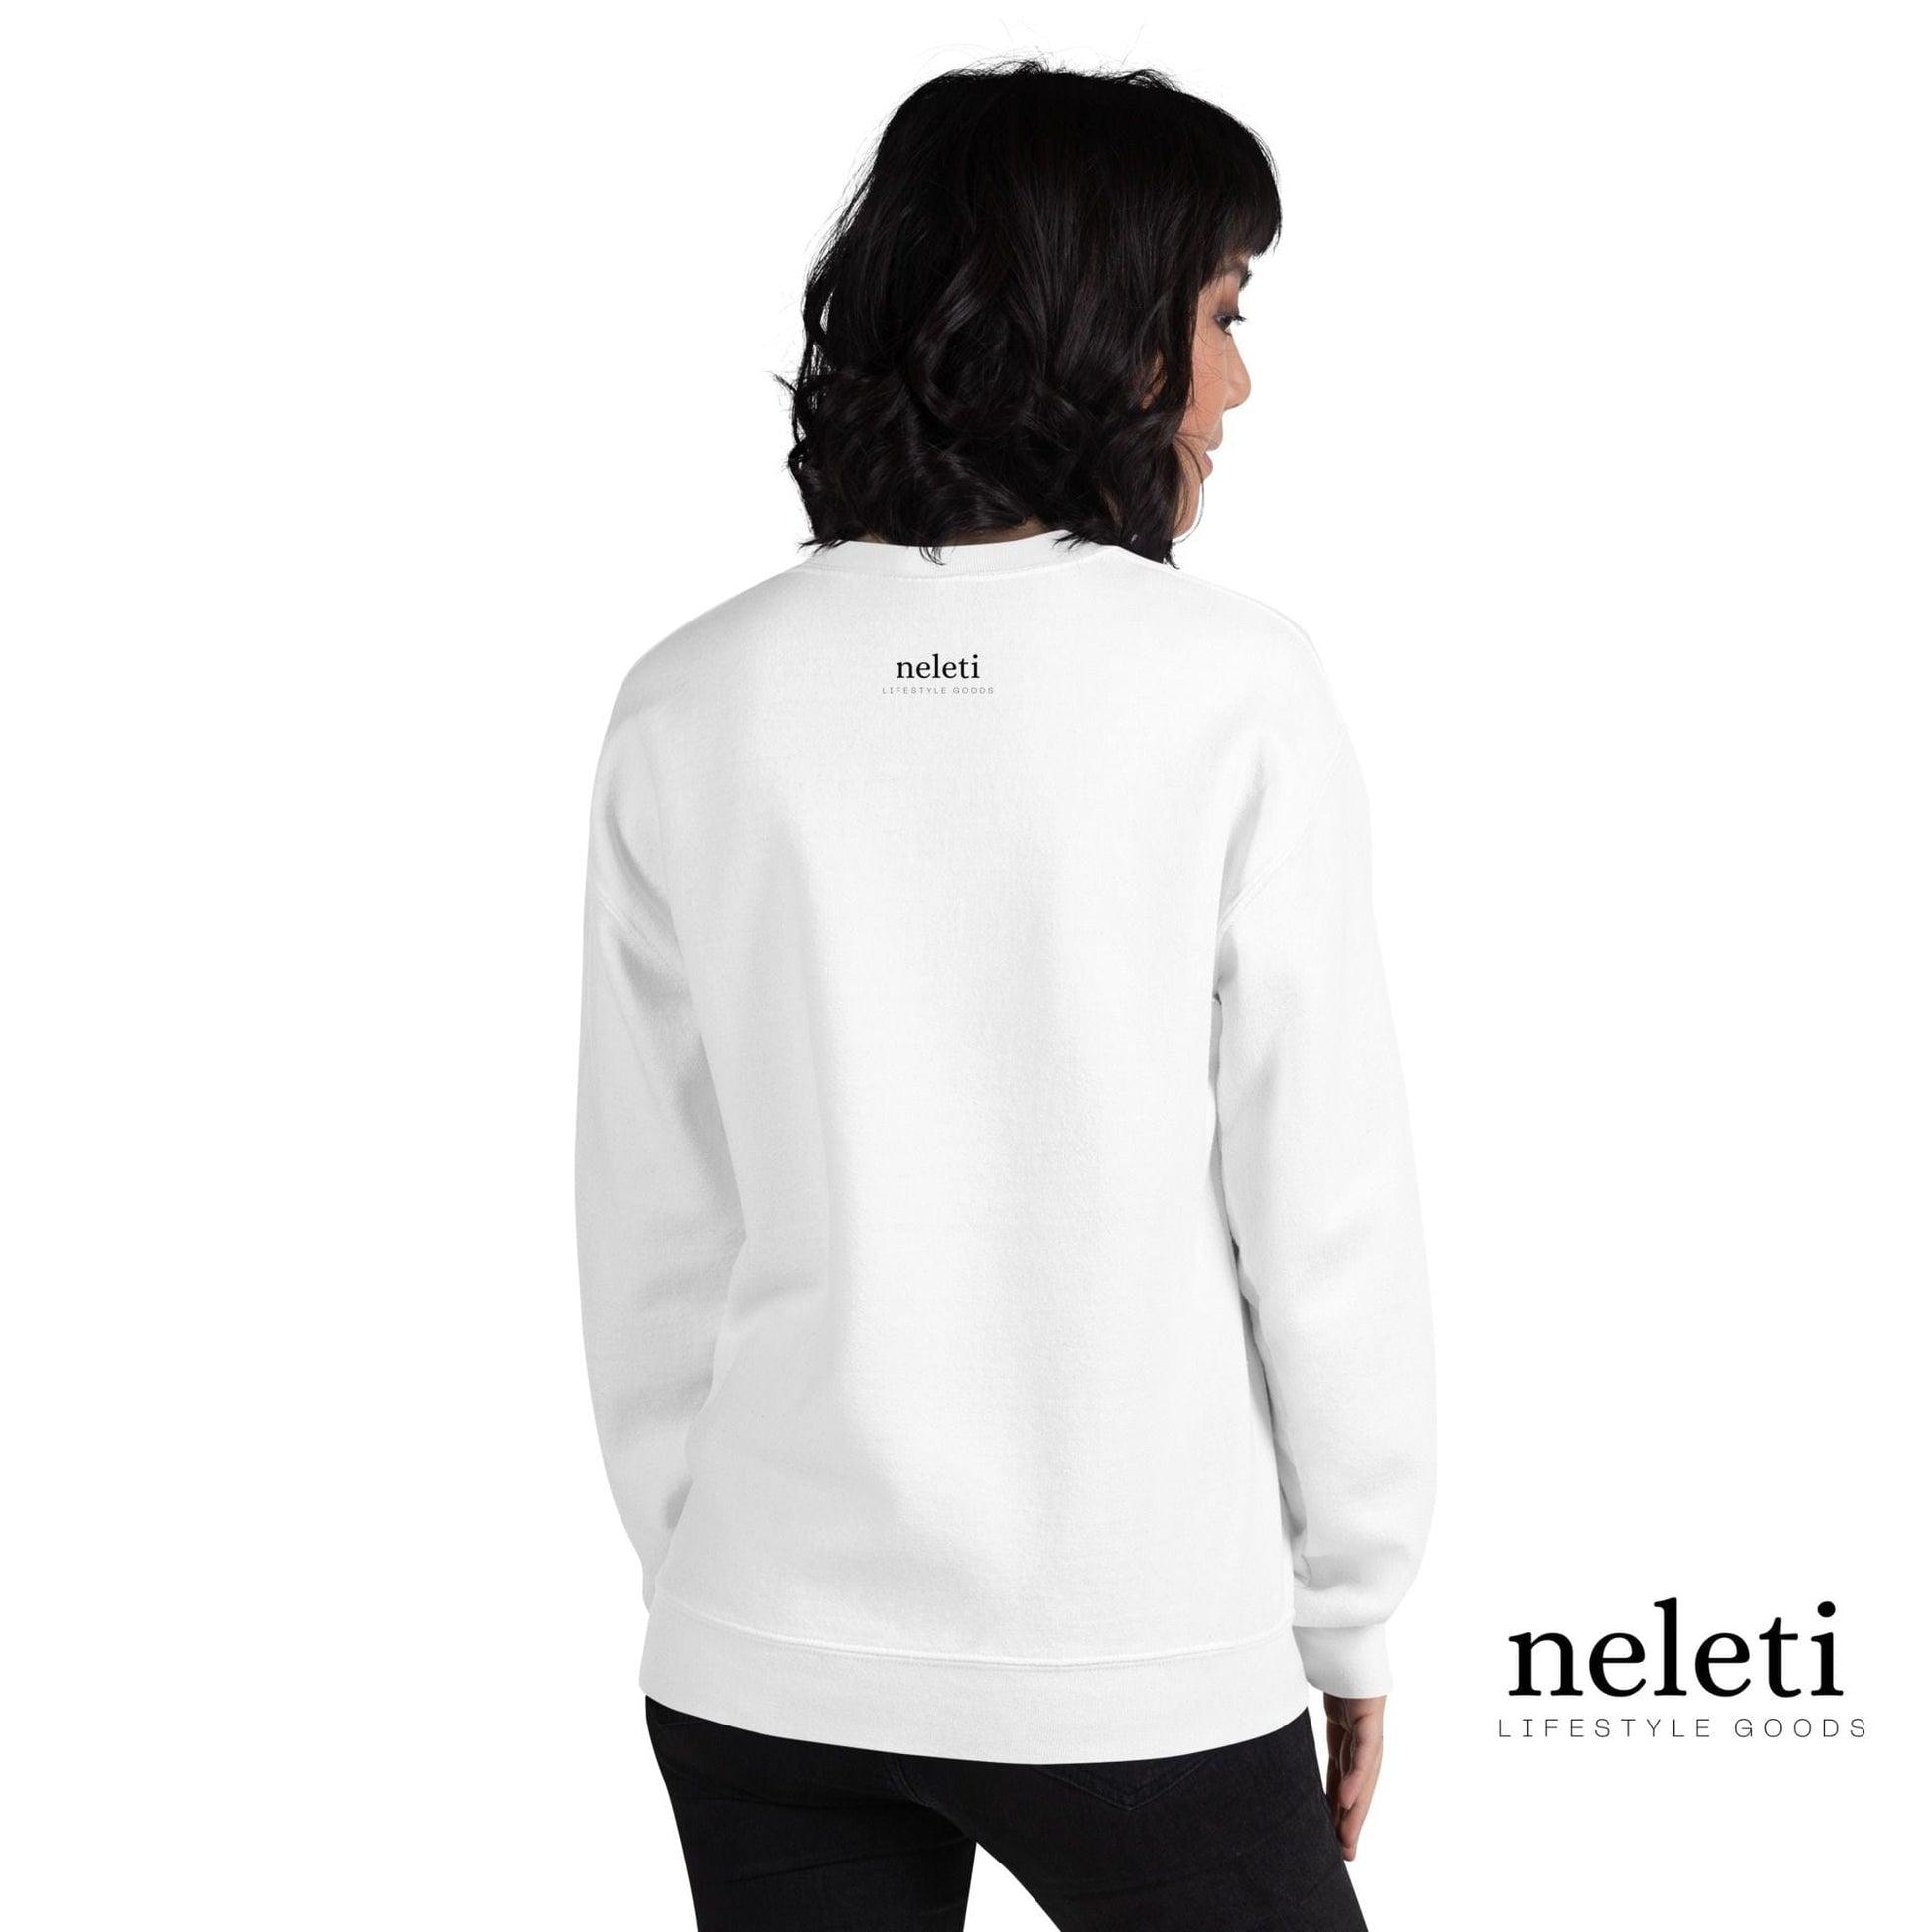 neleti.com-white-custom-sweatshirt-for-dog-mom